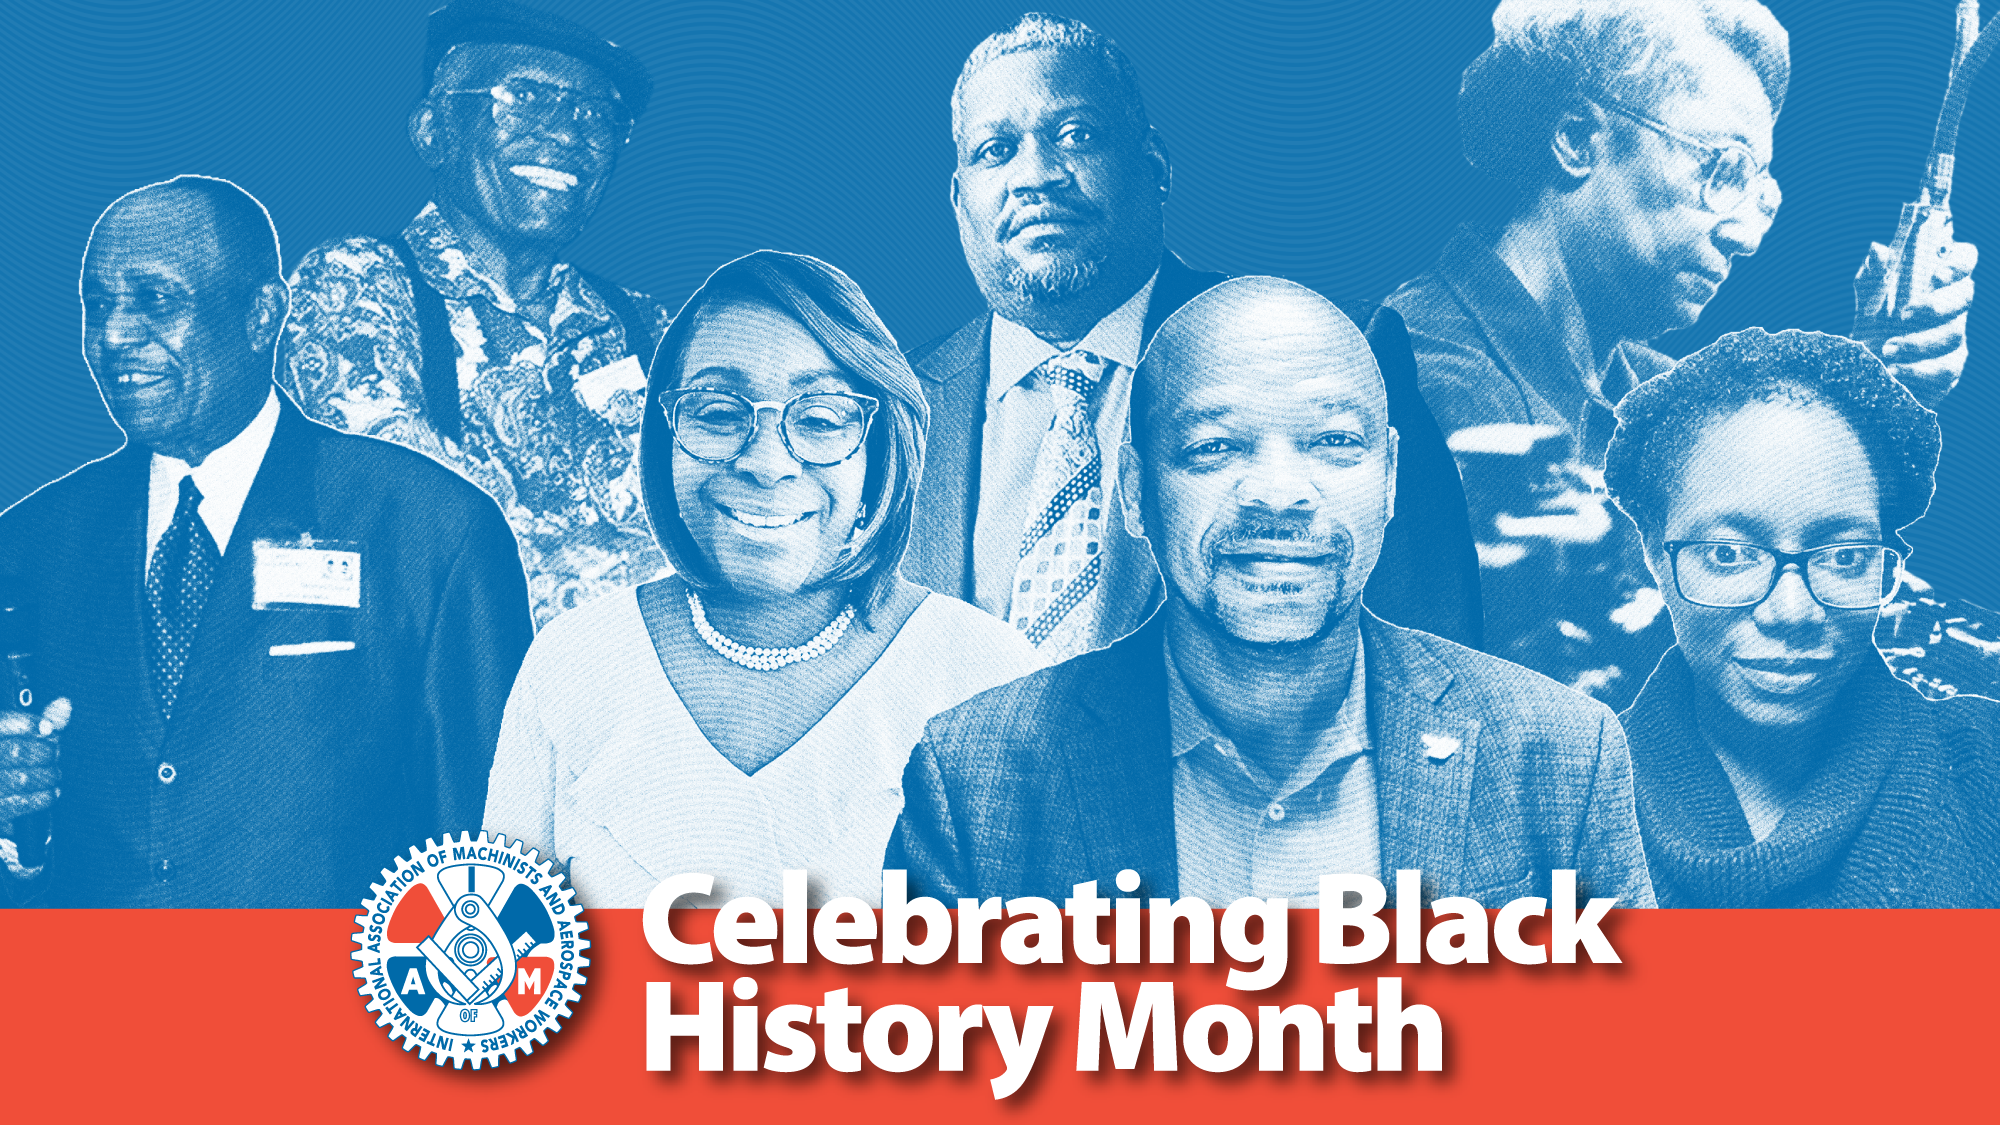 Machinists Union Celebrates Black History Month